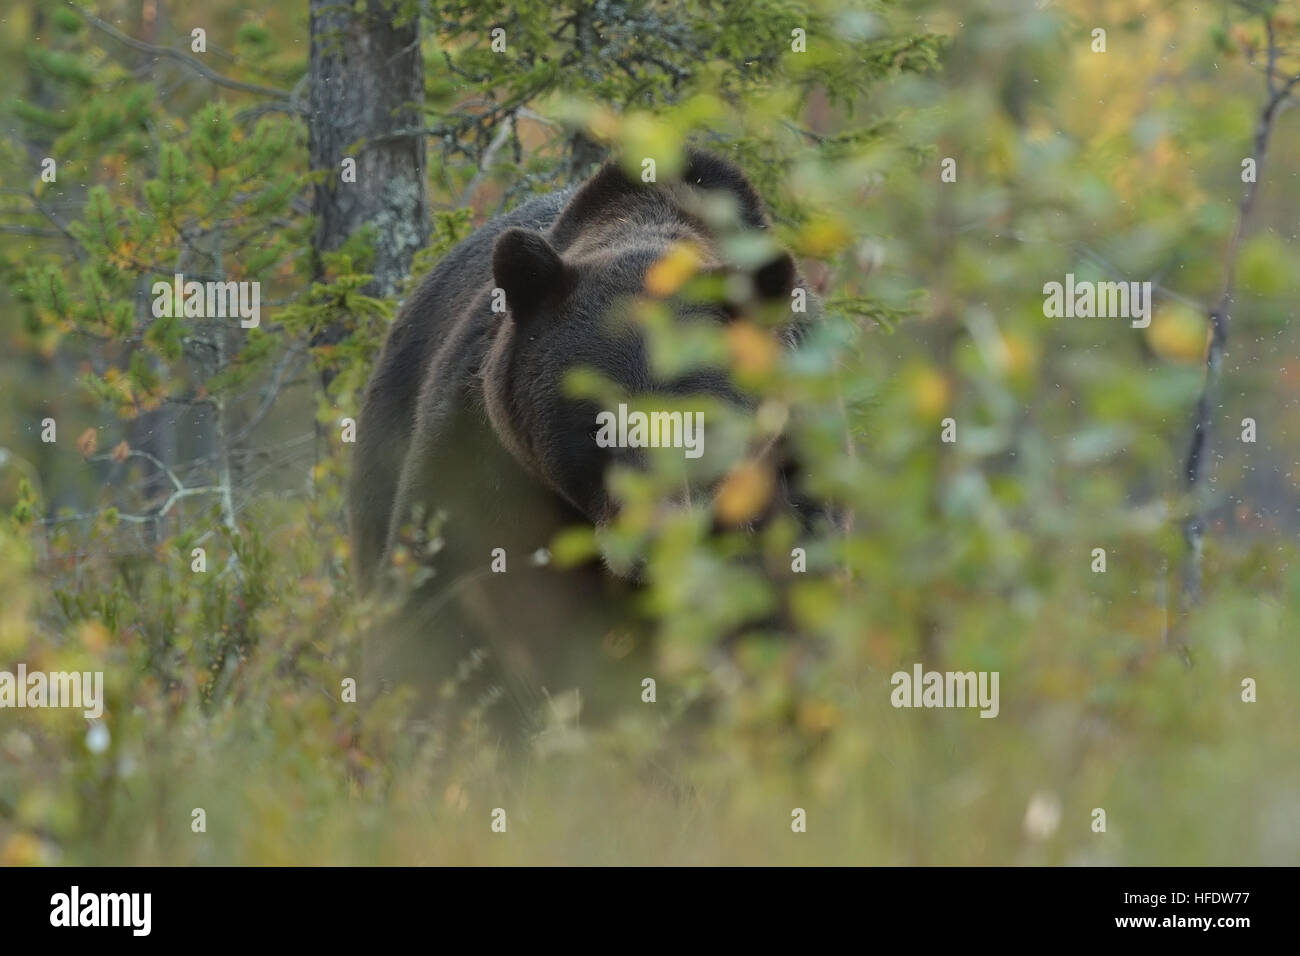 Eye to eye with brown bear. Brown bear peek from behind a bush. Stock Photo